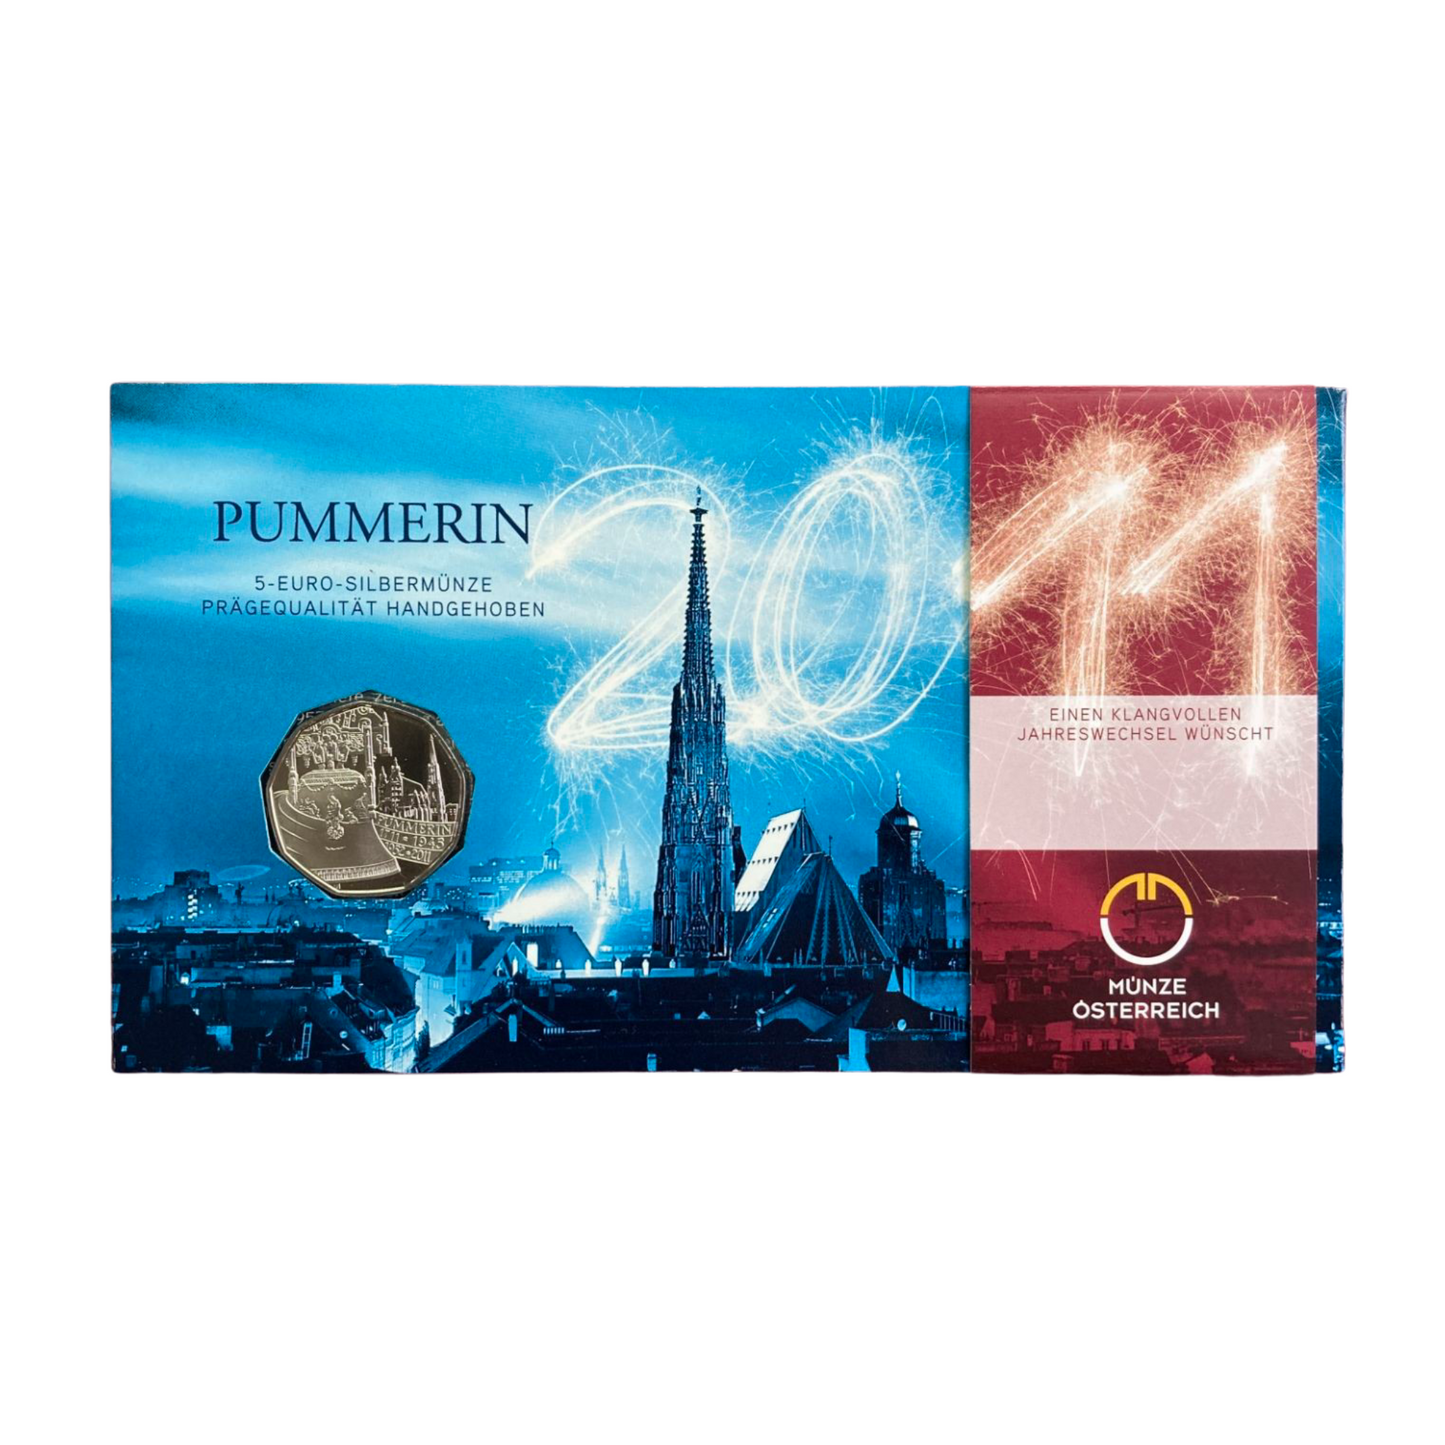 Austria - Moneda 5 euros plata 2011 - Campana Pummerin